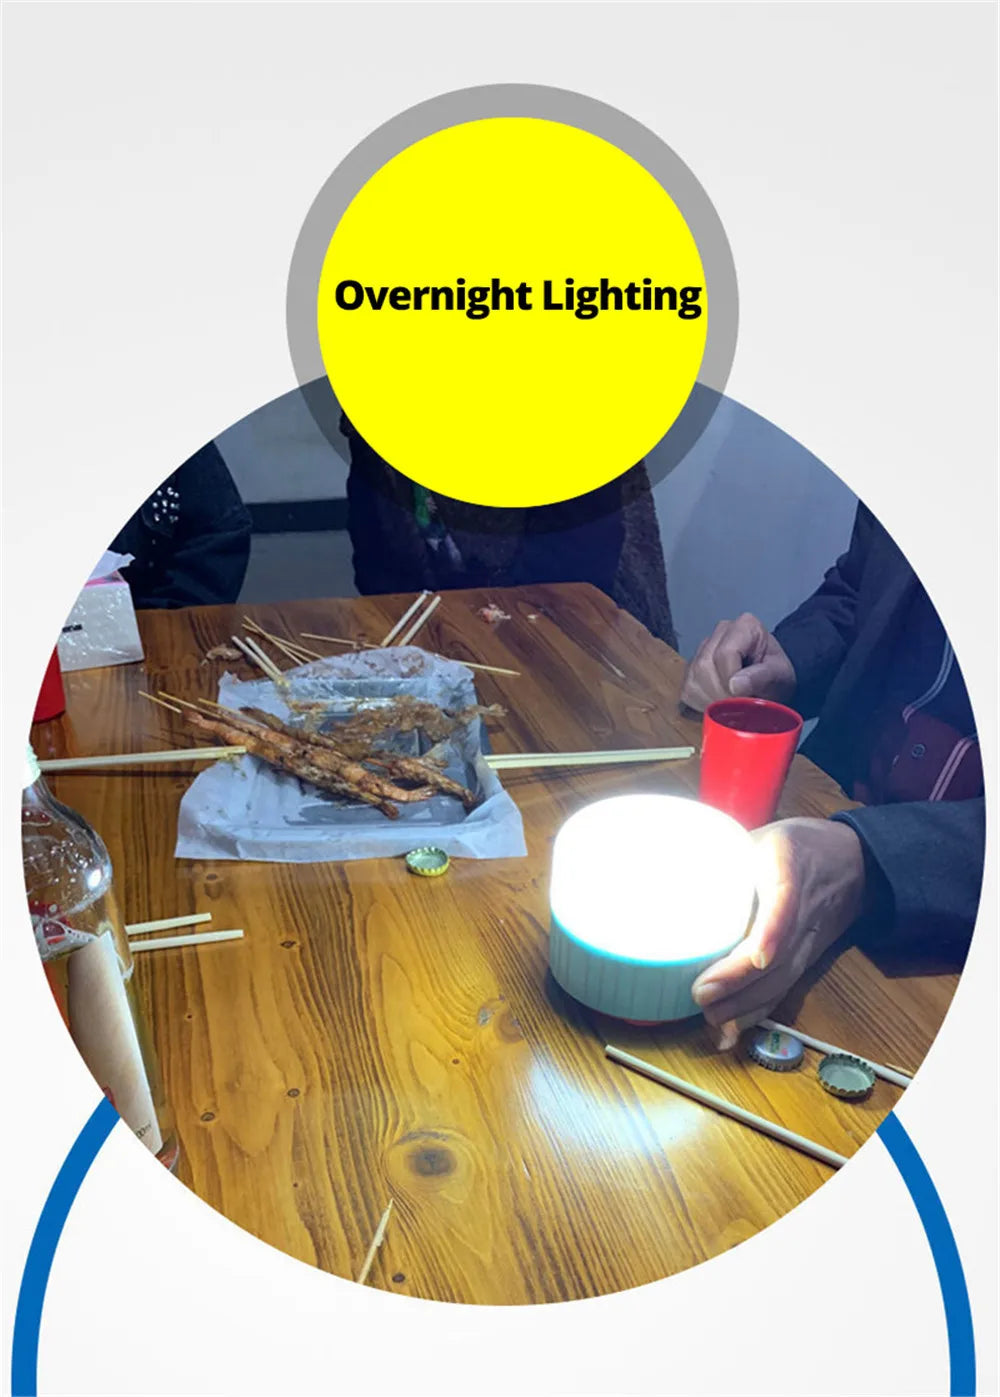 High Power Solar LED Camping Light, Solar-powered LED light lantern for easy portability and reliable lighting.